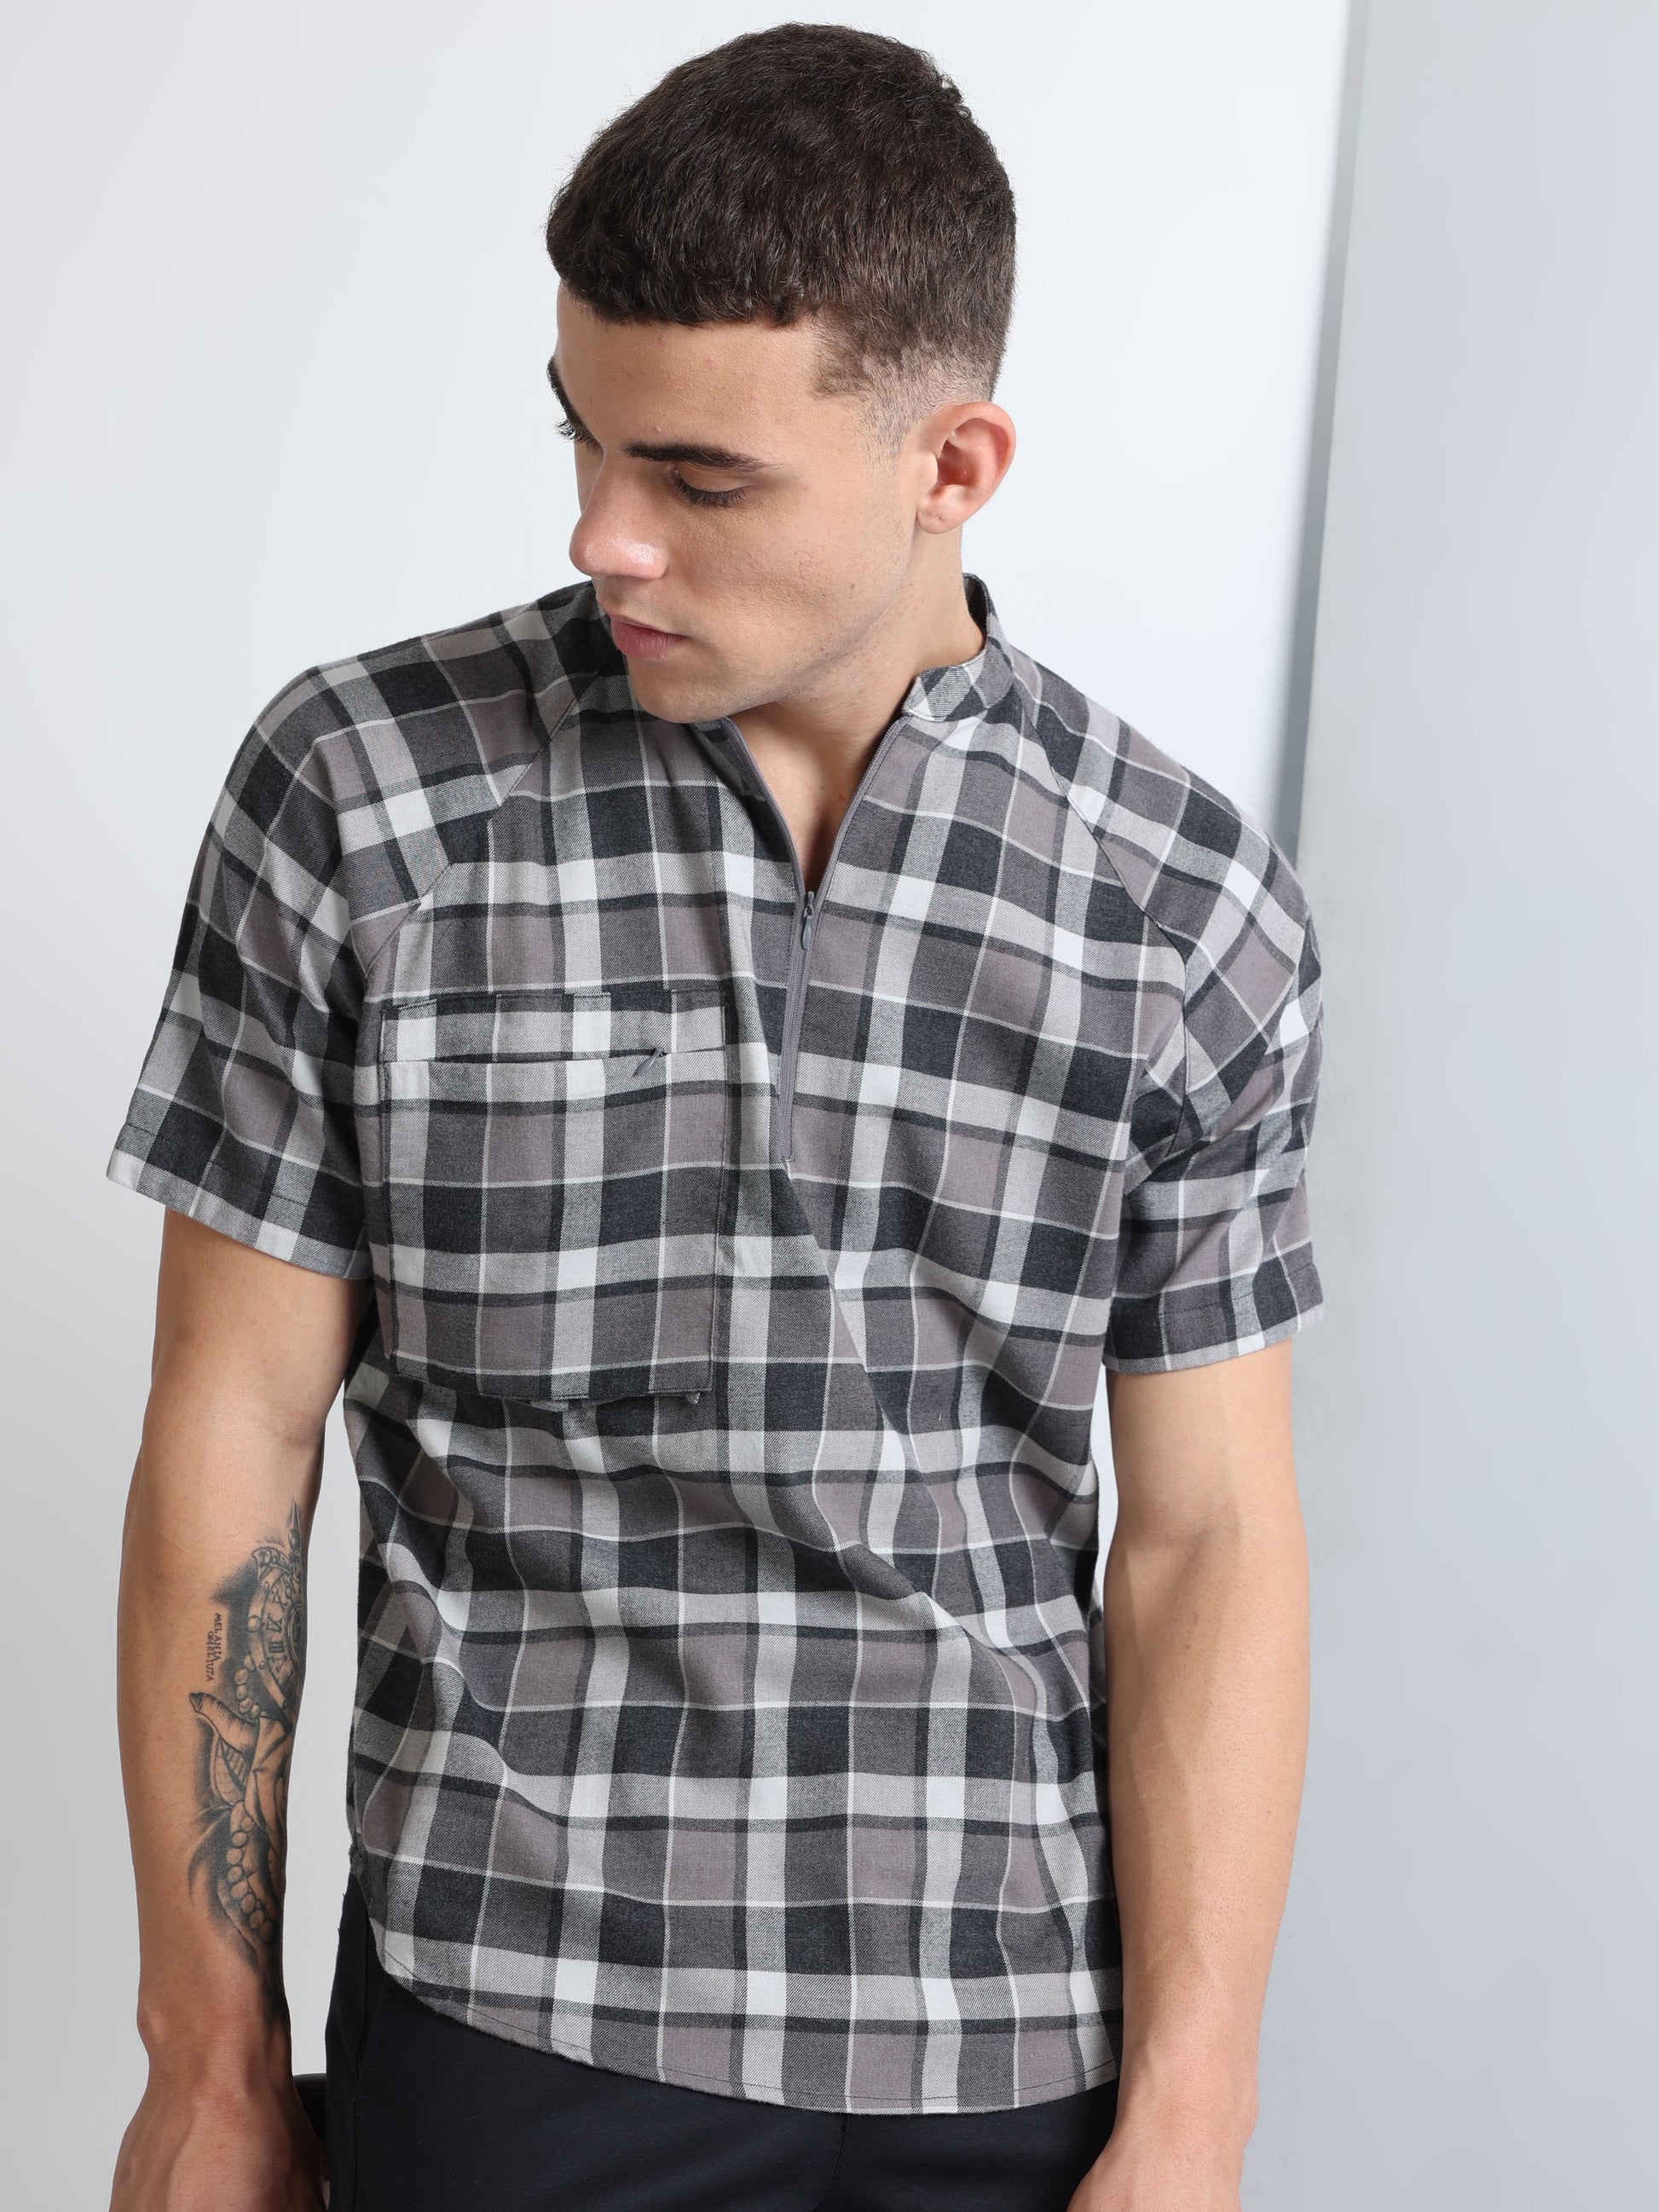 Buy Raglan Half Sleeve Chinese Collar Shirt Online.